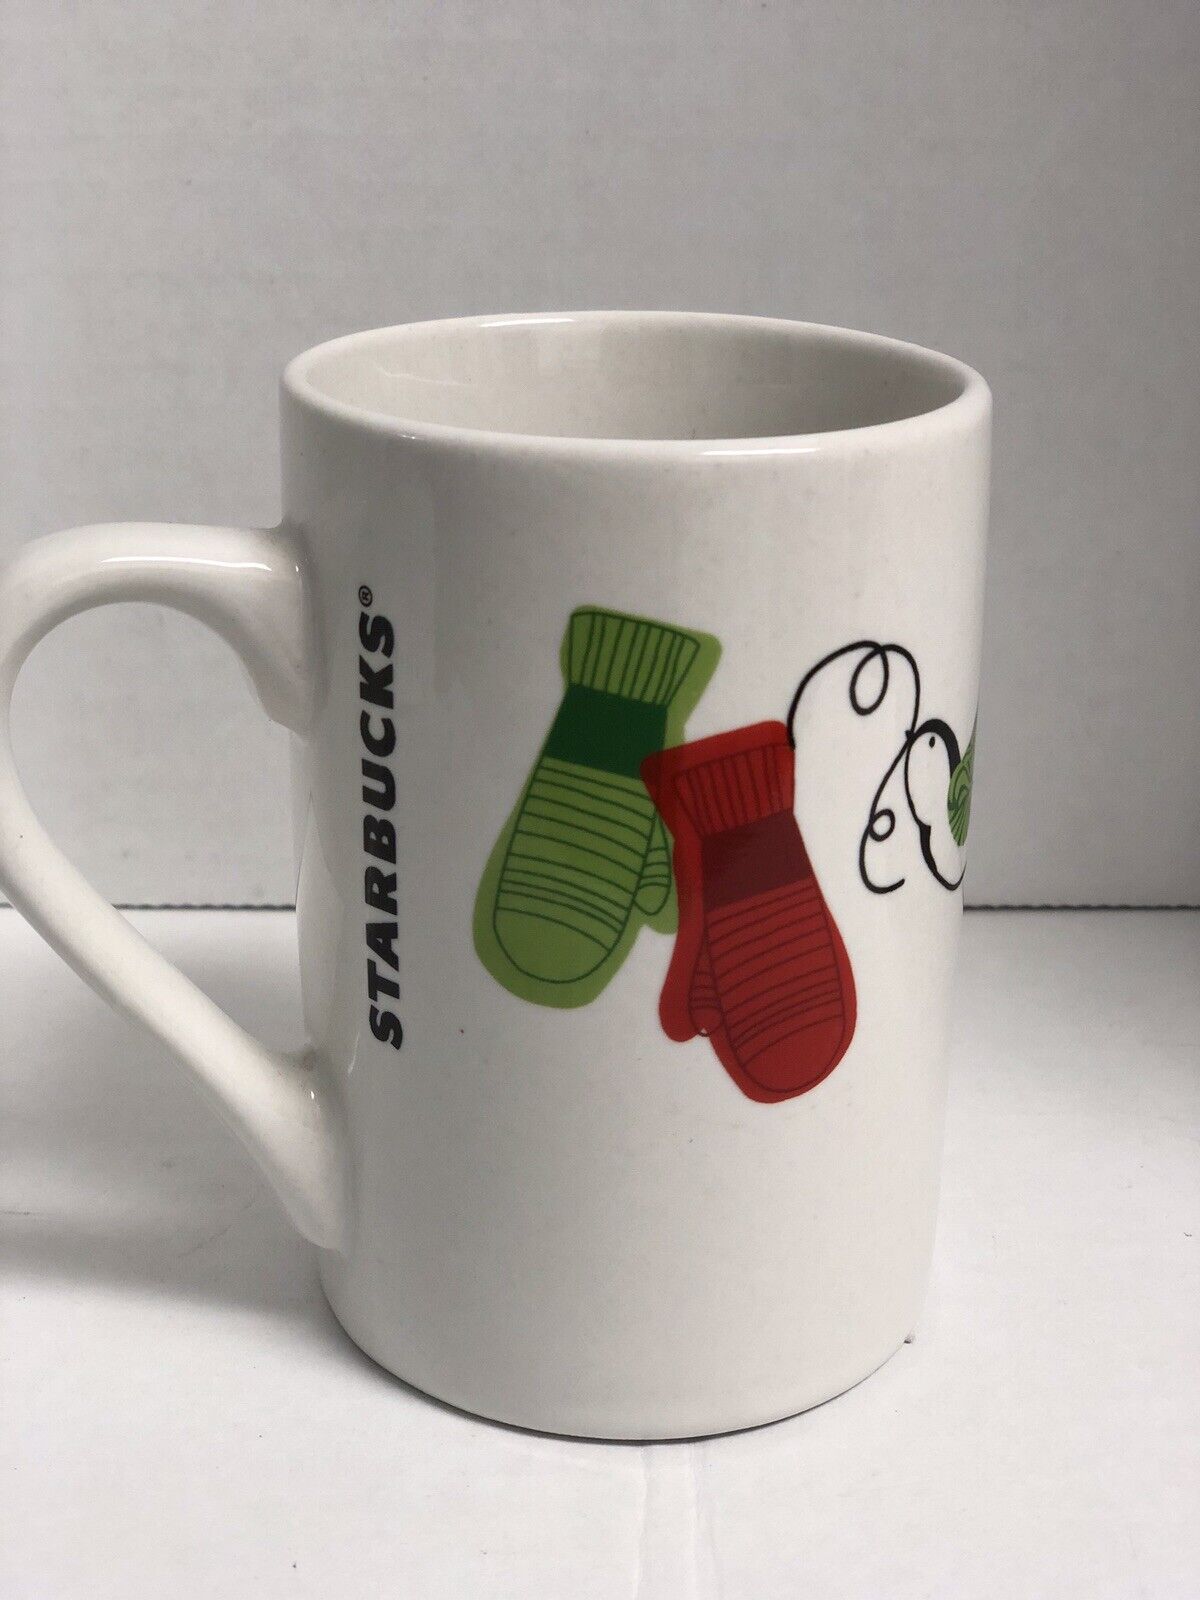 Starbucks Christmas Coffee Mug Bird with Mittens Ceramic Cup 10oz 2011